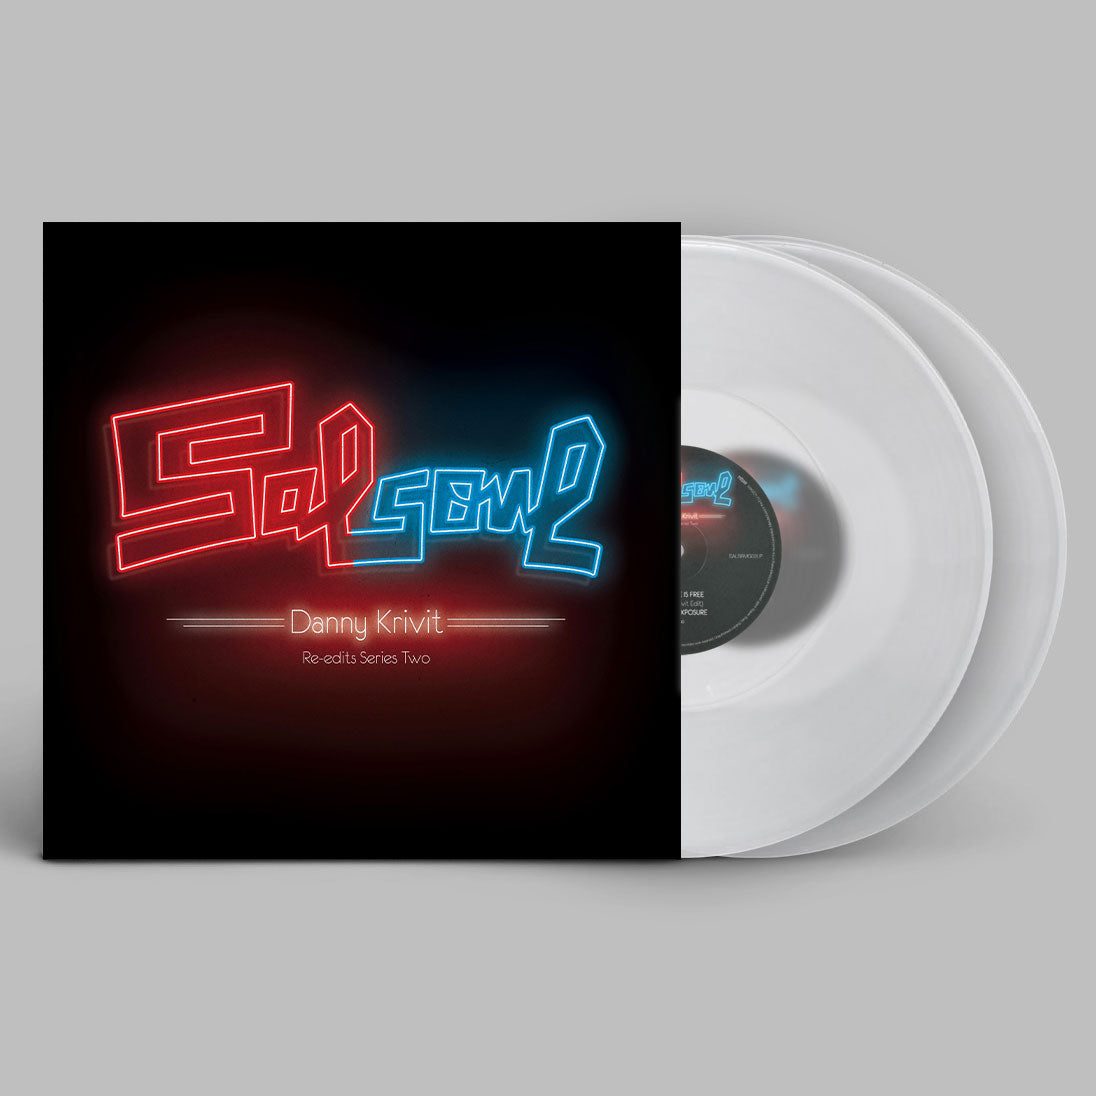 VARIOUS ARTISTS 'SALSOUL RE-EDITS SERIES TWO : DANNY KRIVIT (Clear Vinyl Repress)' 2x12"